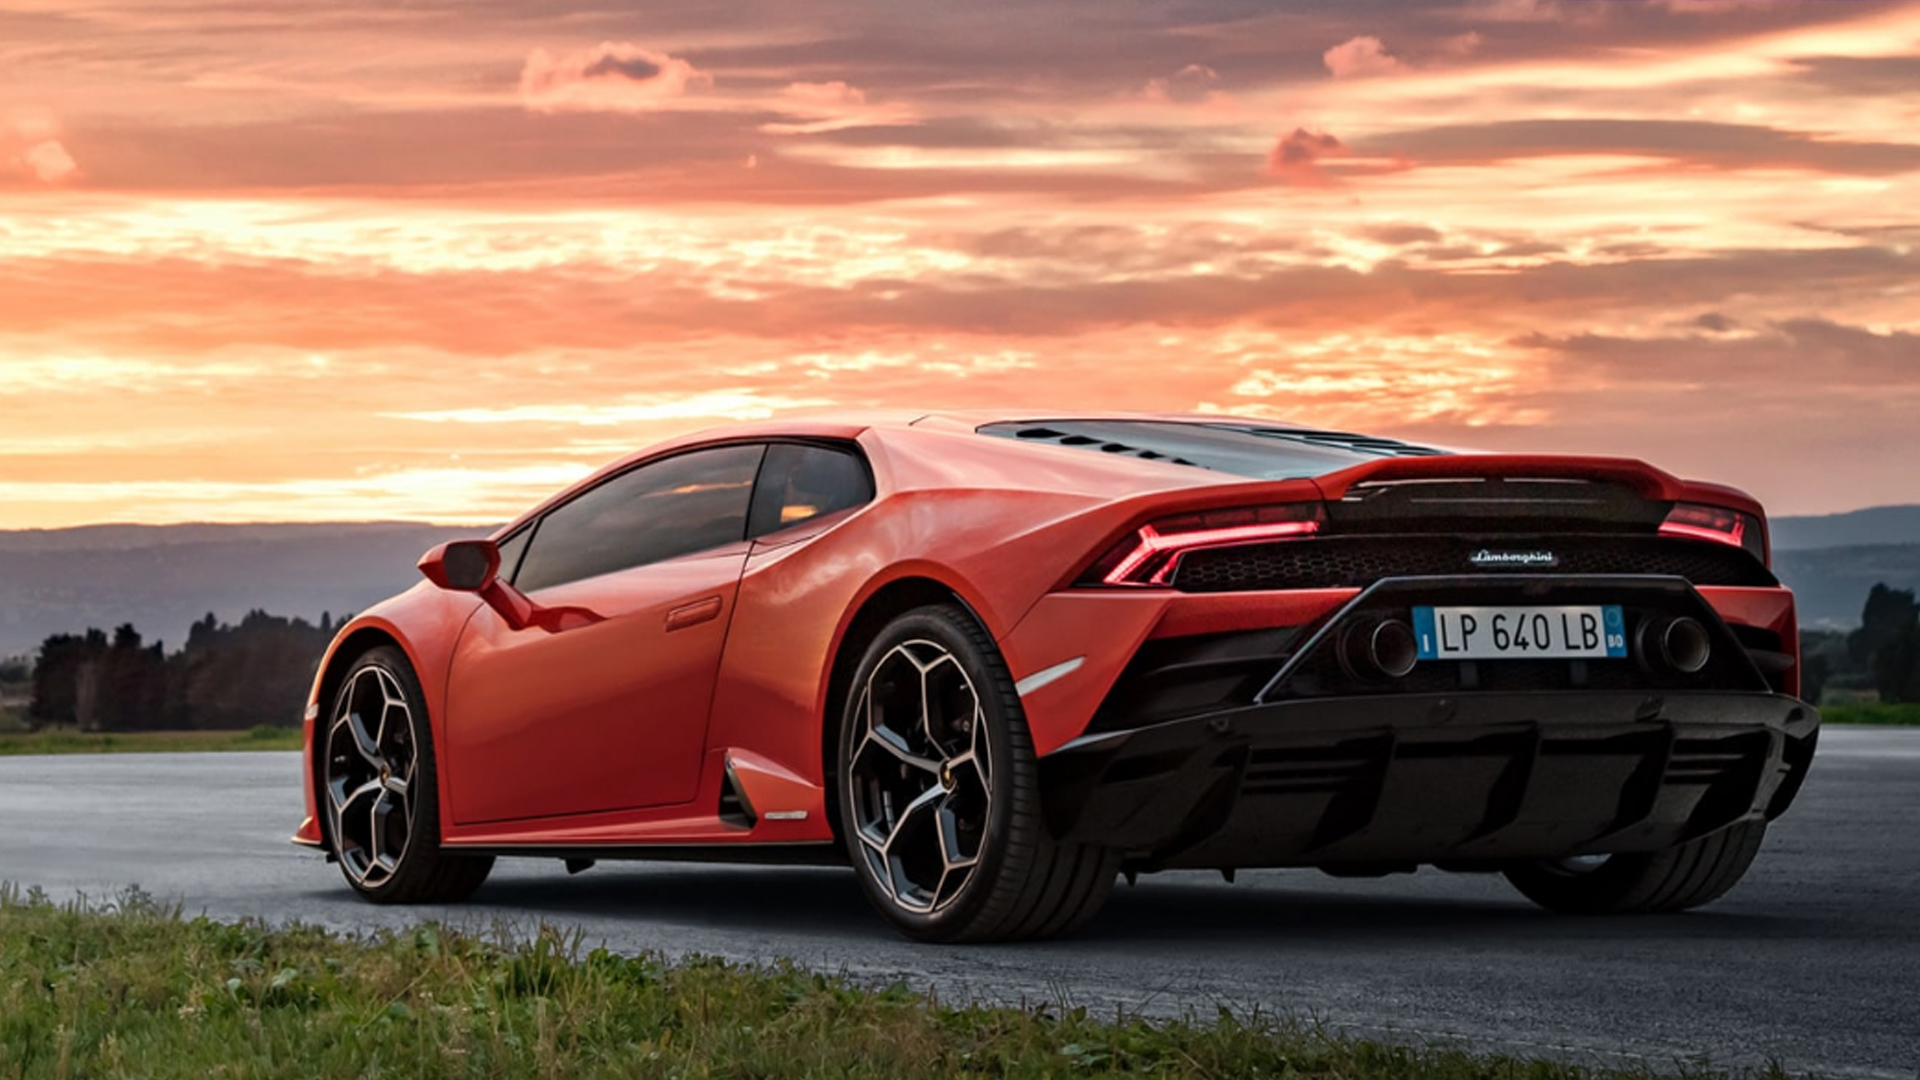 Lamborghini Huracan 2019 Evo Exterior Car Photos Overdrive